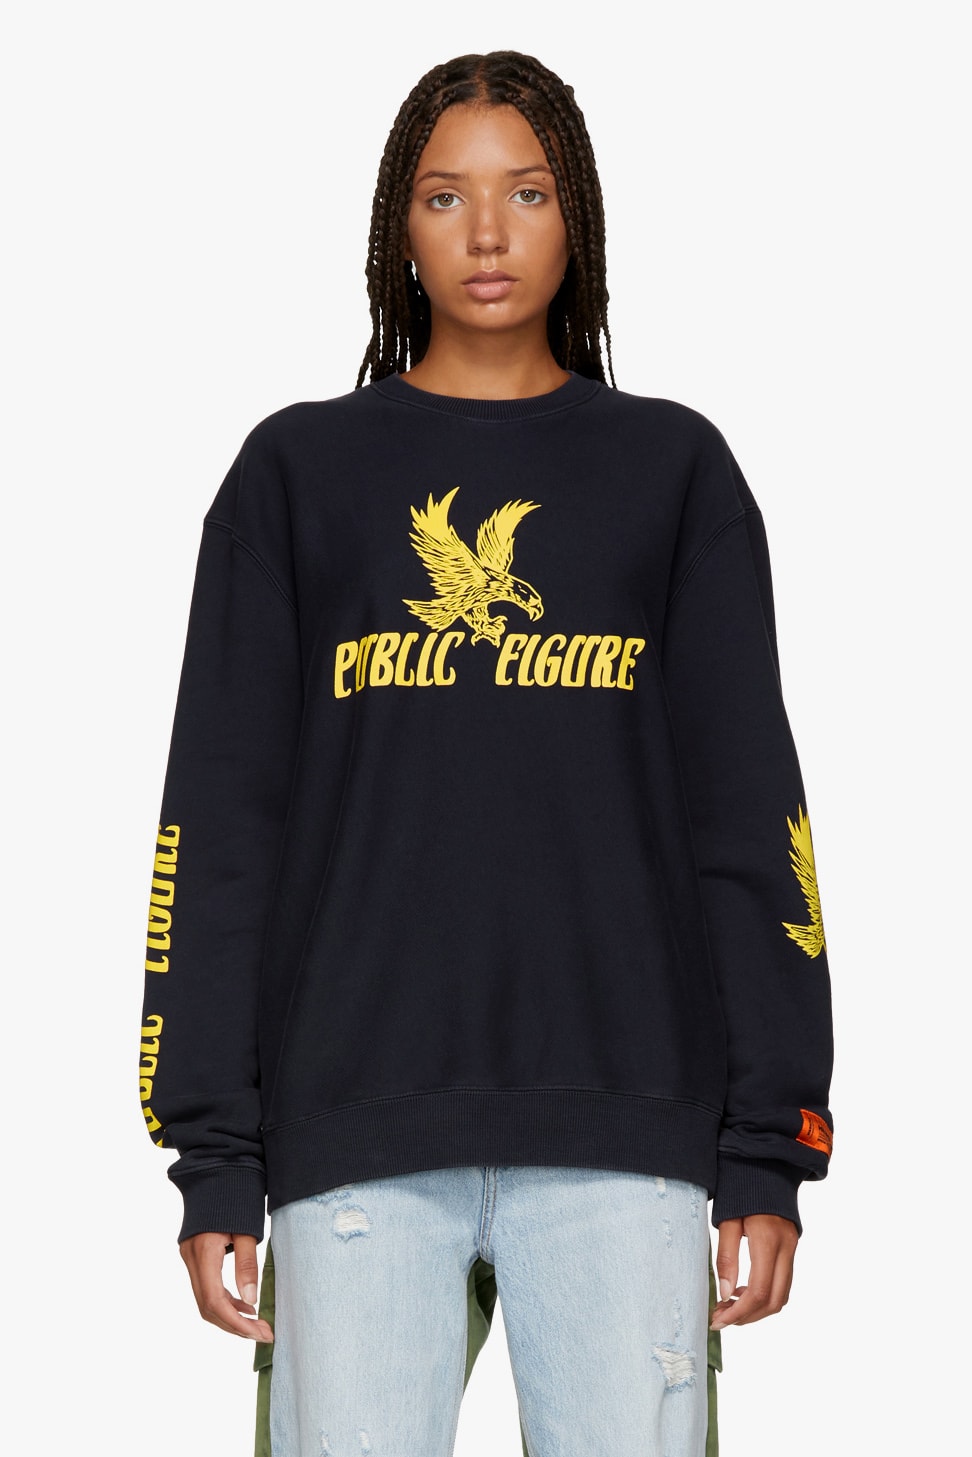 Heron Preston Fall Winter 2018 Collection Fashion SSENSE Hoodie T-Shirt Print Graphic Black Streetwear